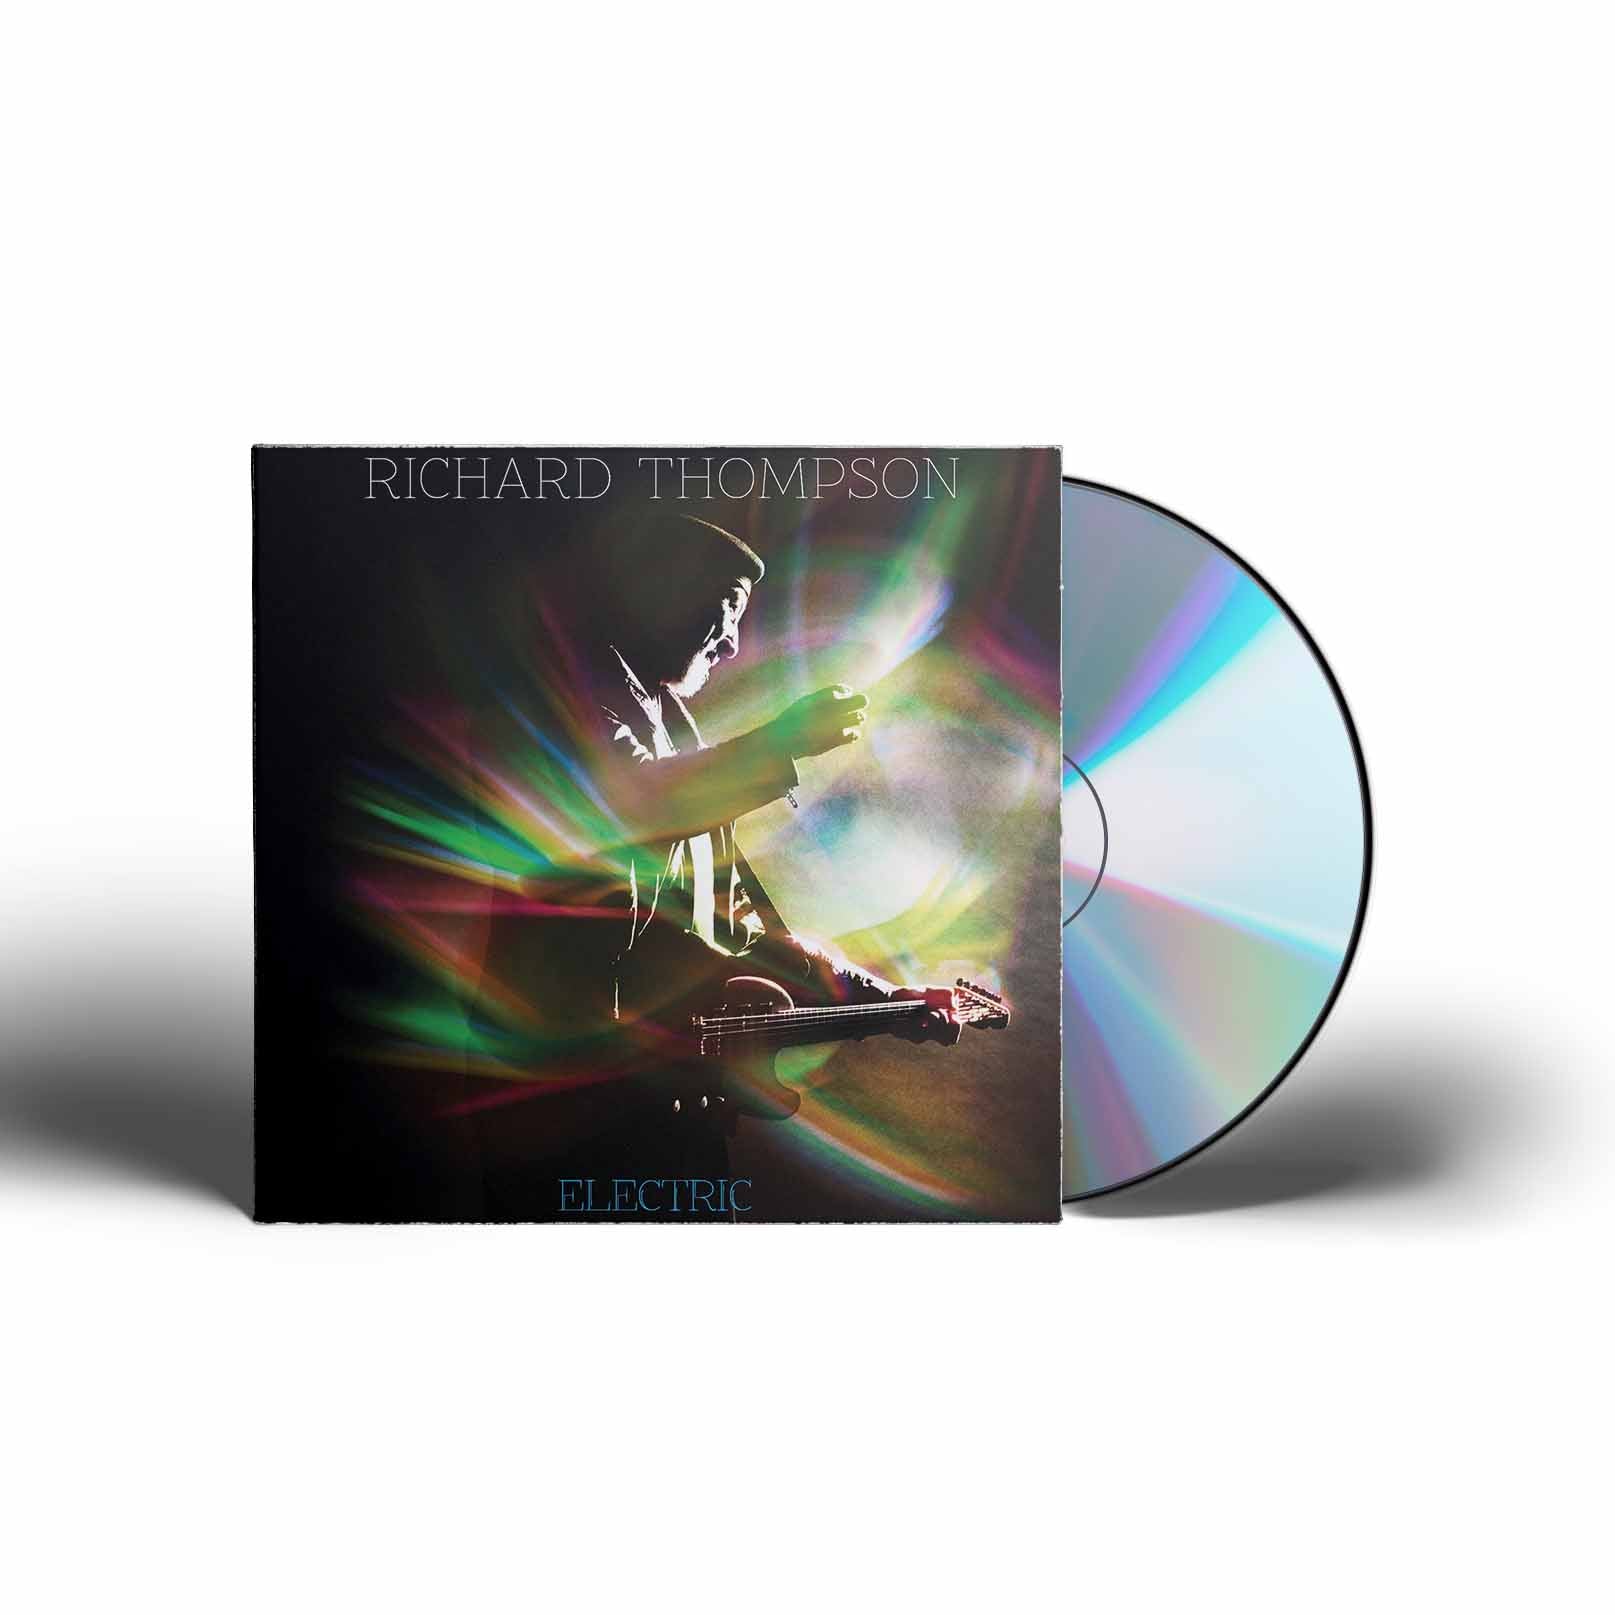 Richard Thompson - Electric [Deluxe CD]